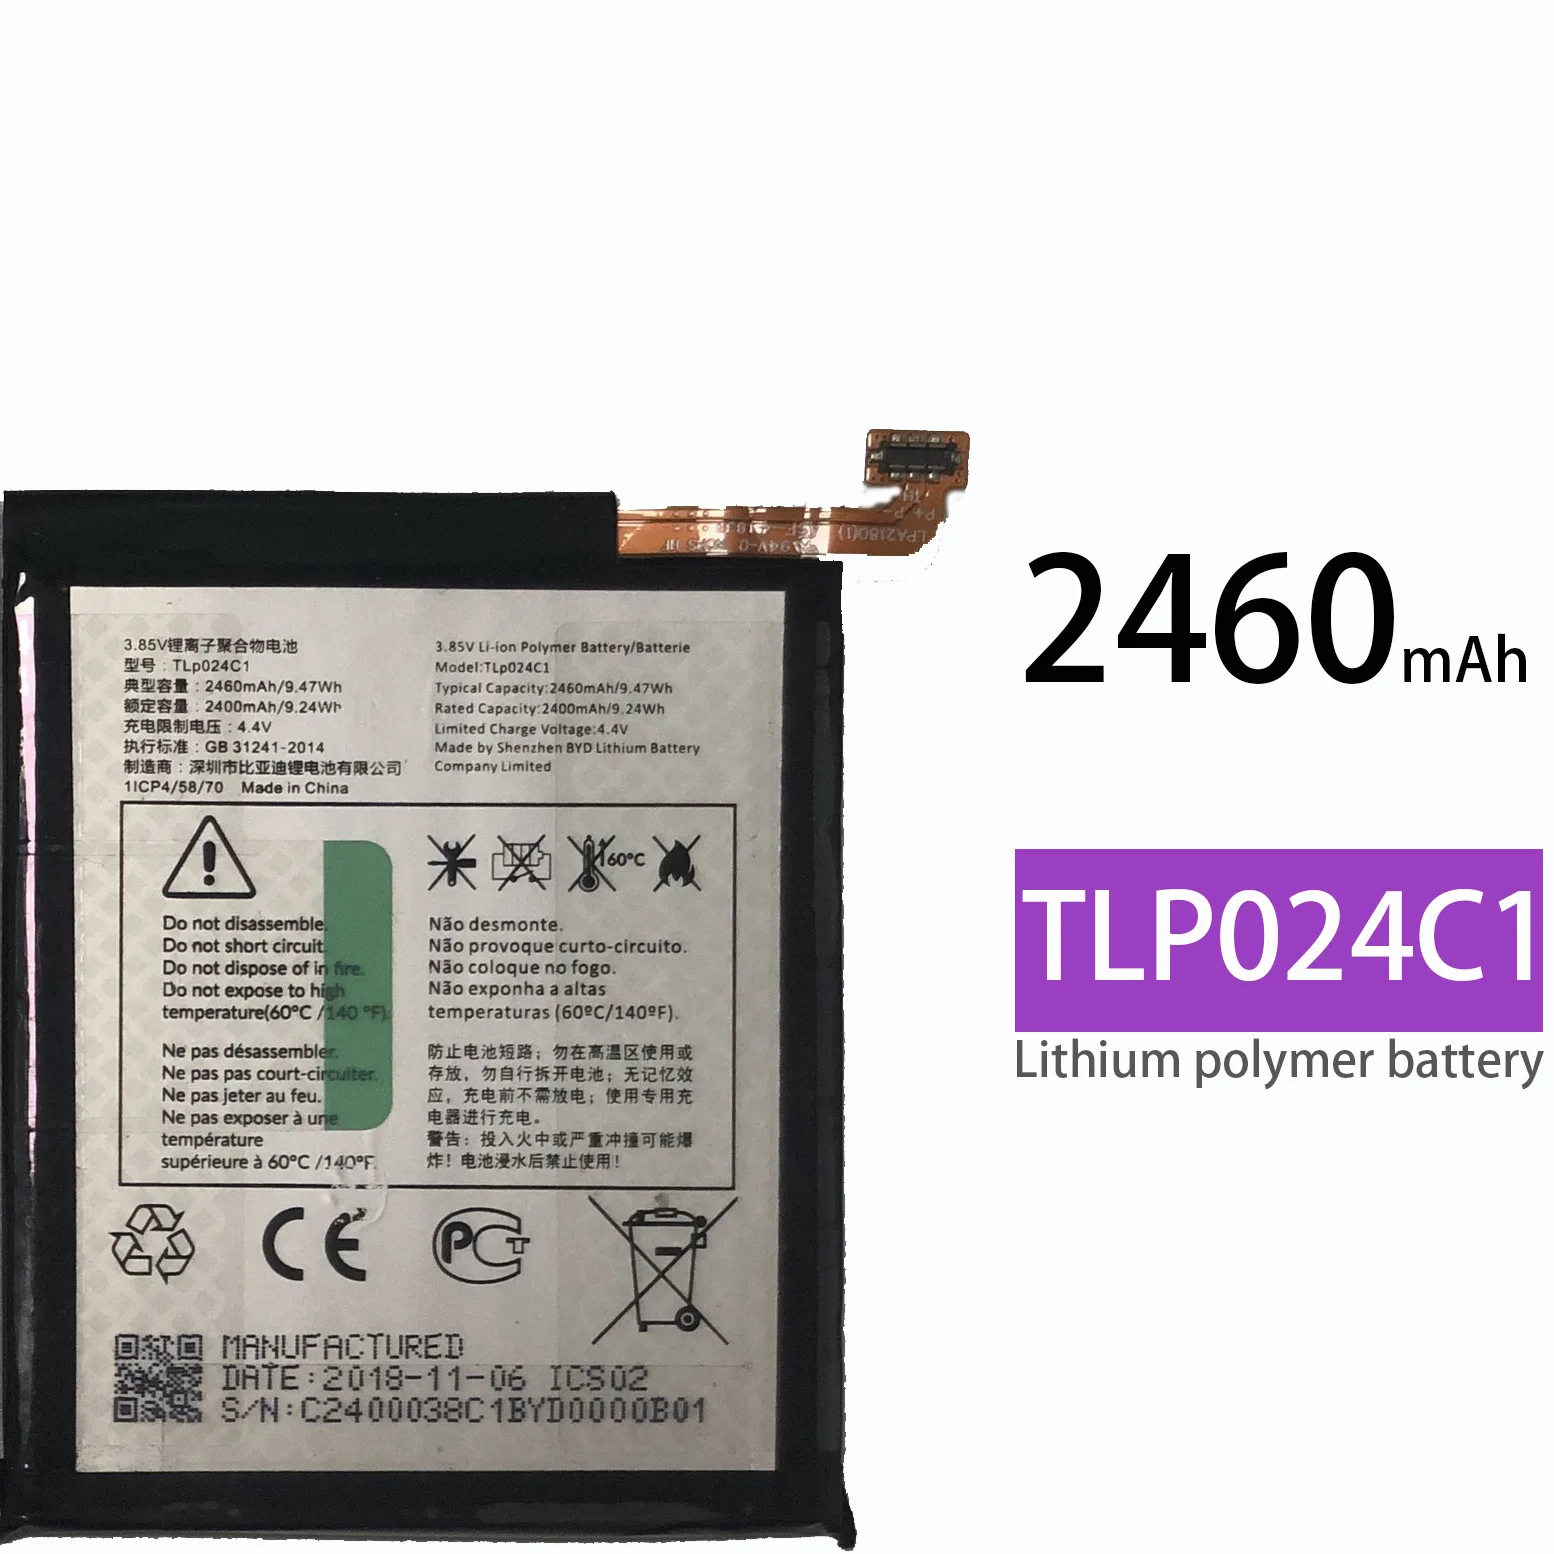 

Applicable TCL Alcatel / TCL520 TLP024C1 PV TCL 580 Mobile Battery TLP024CJ